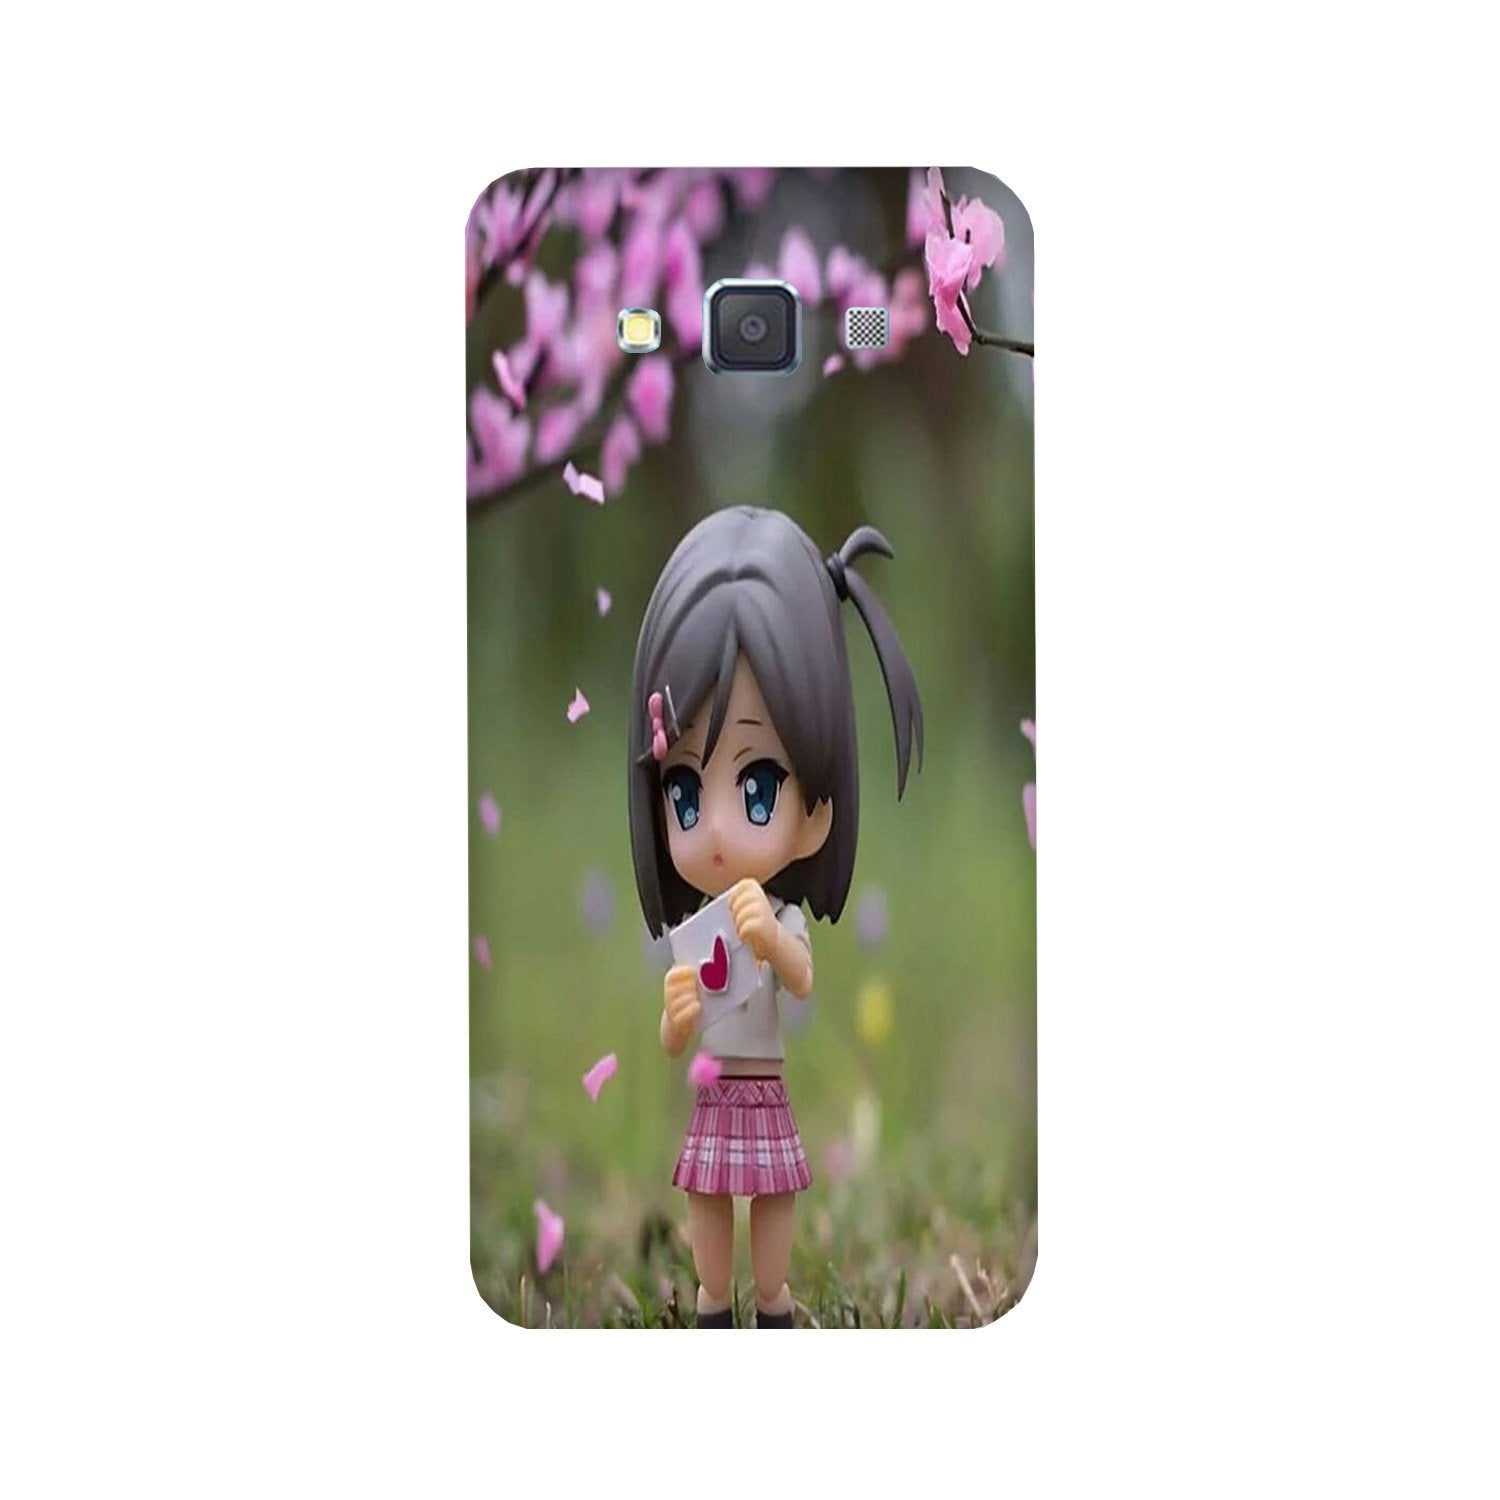 Cute Girl Case for Galaxy A5 (2015)